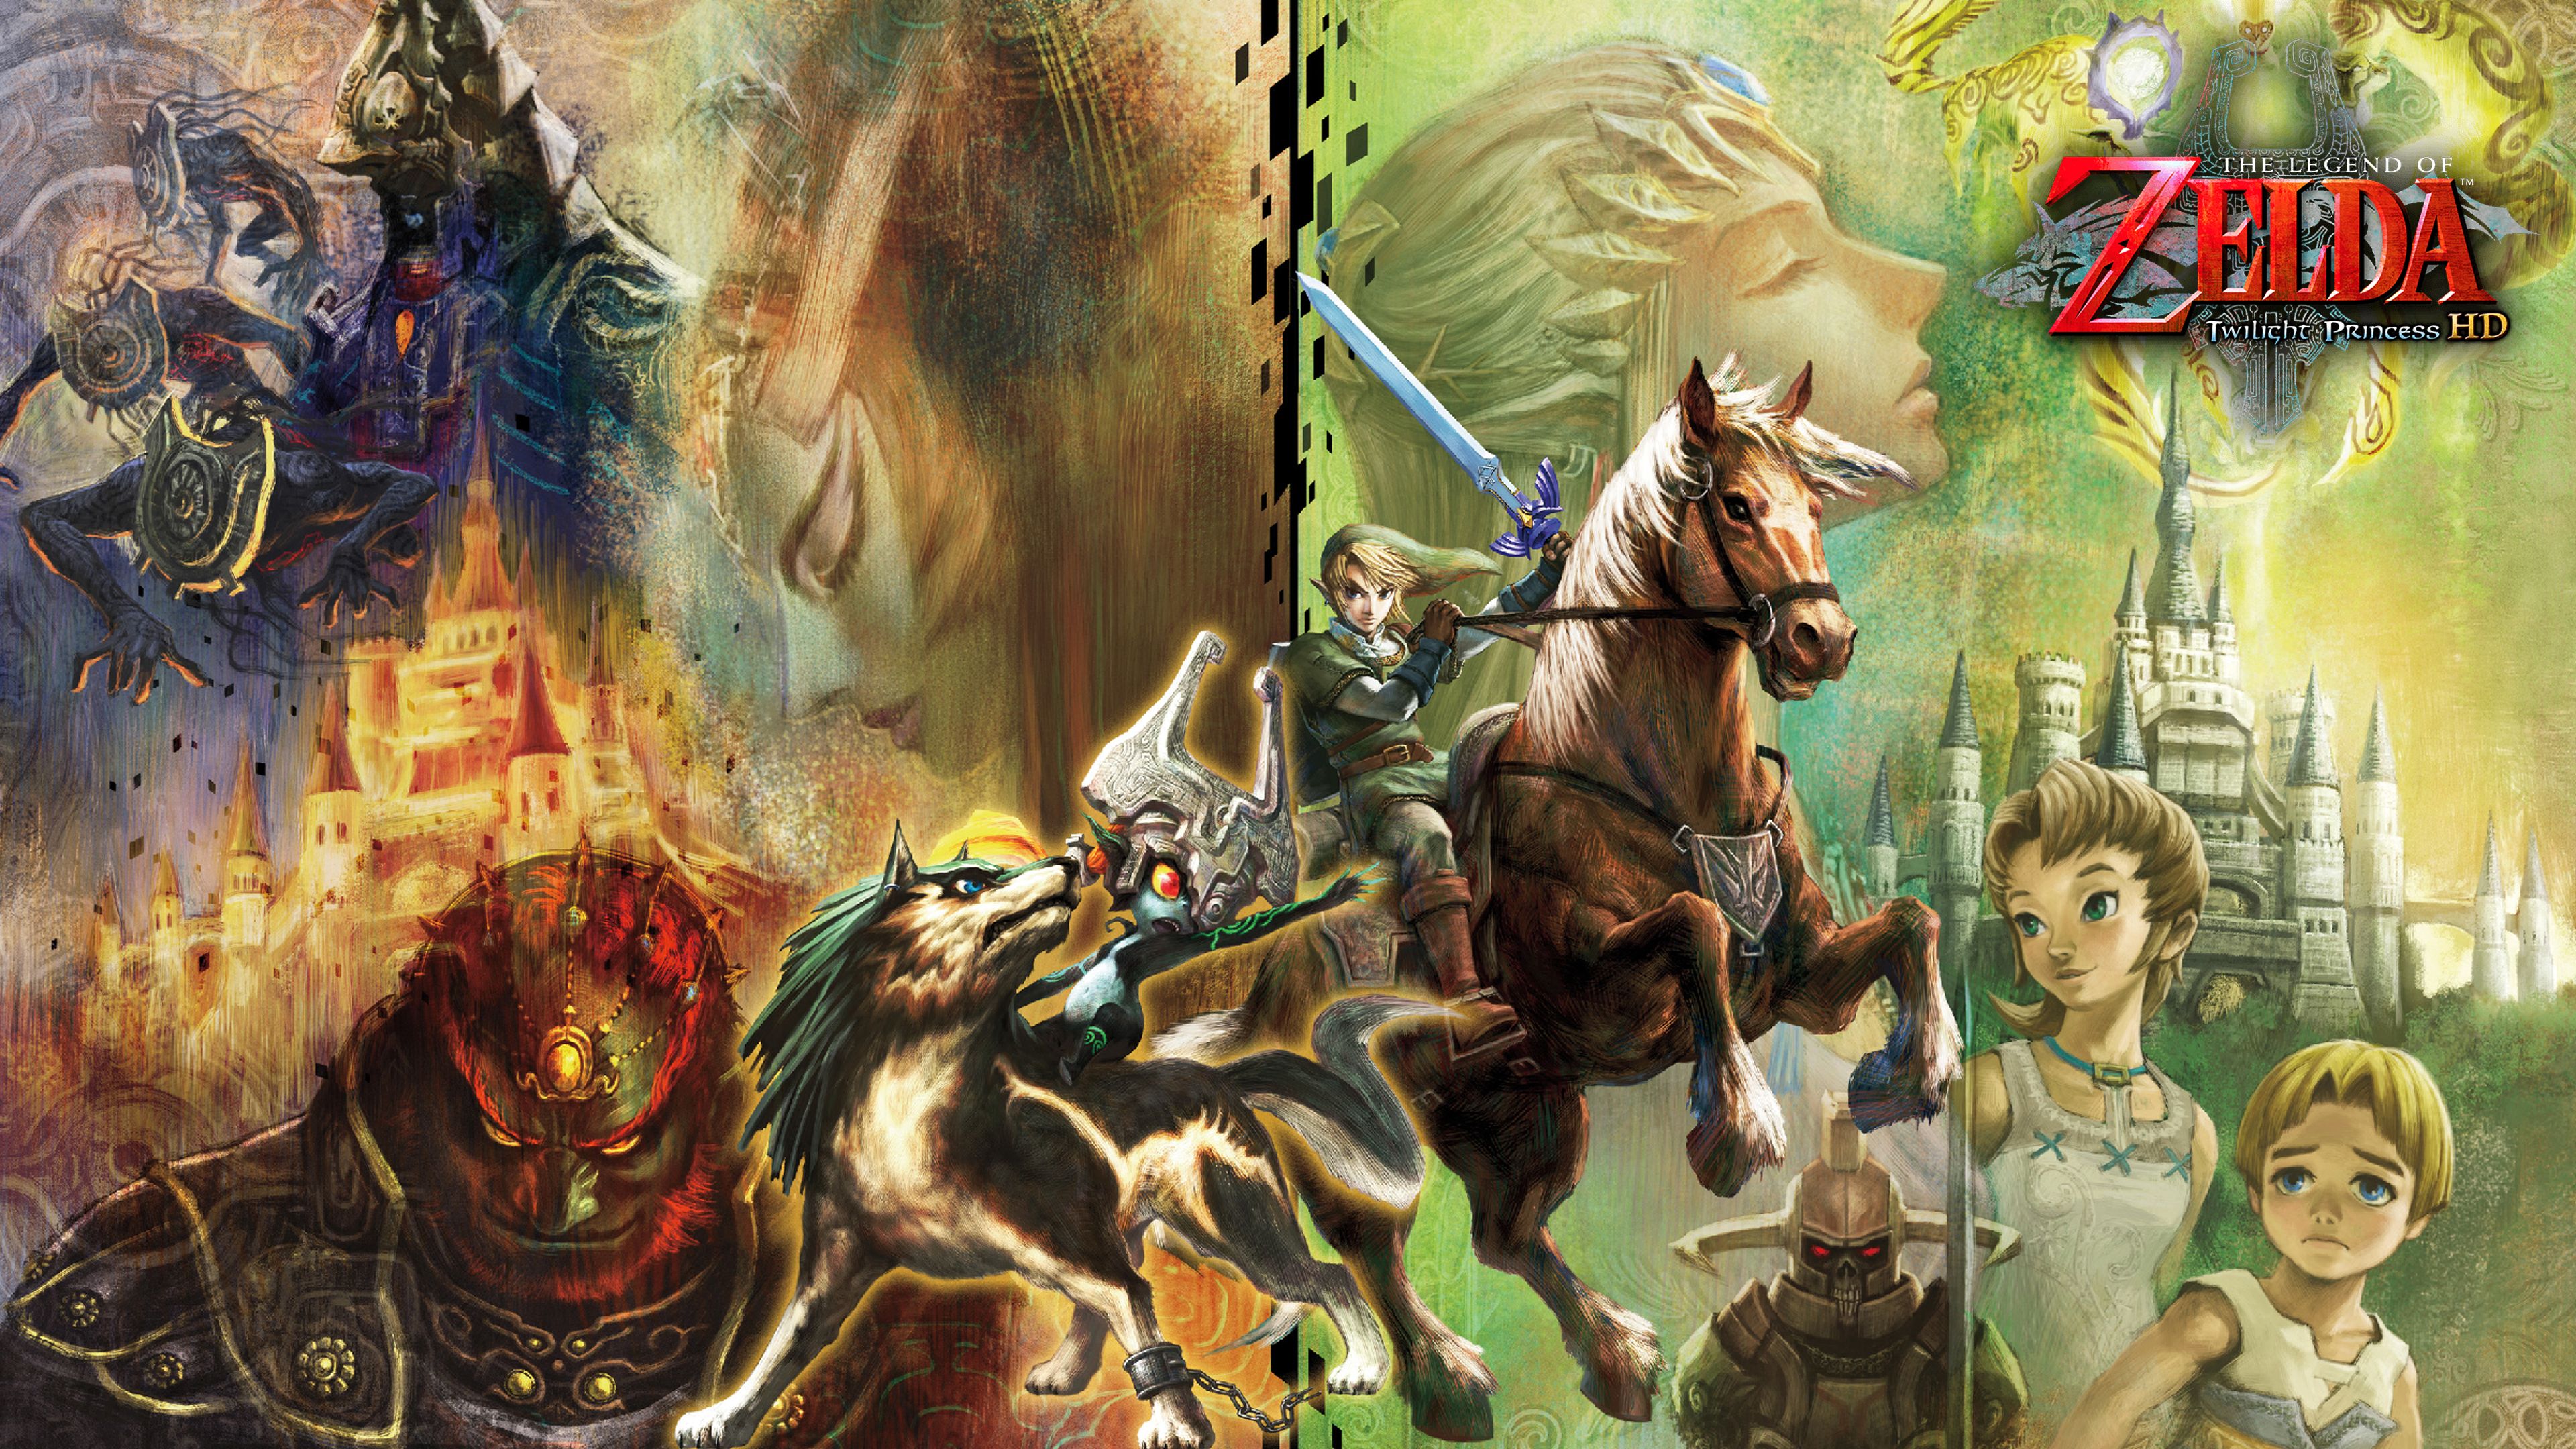 the legend of zelda: twilight princess, ganondorf, video game, link, midna (the legend of zelda), zelda